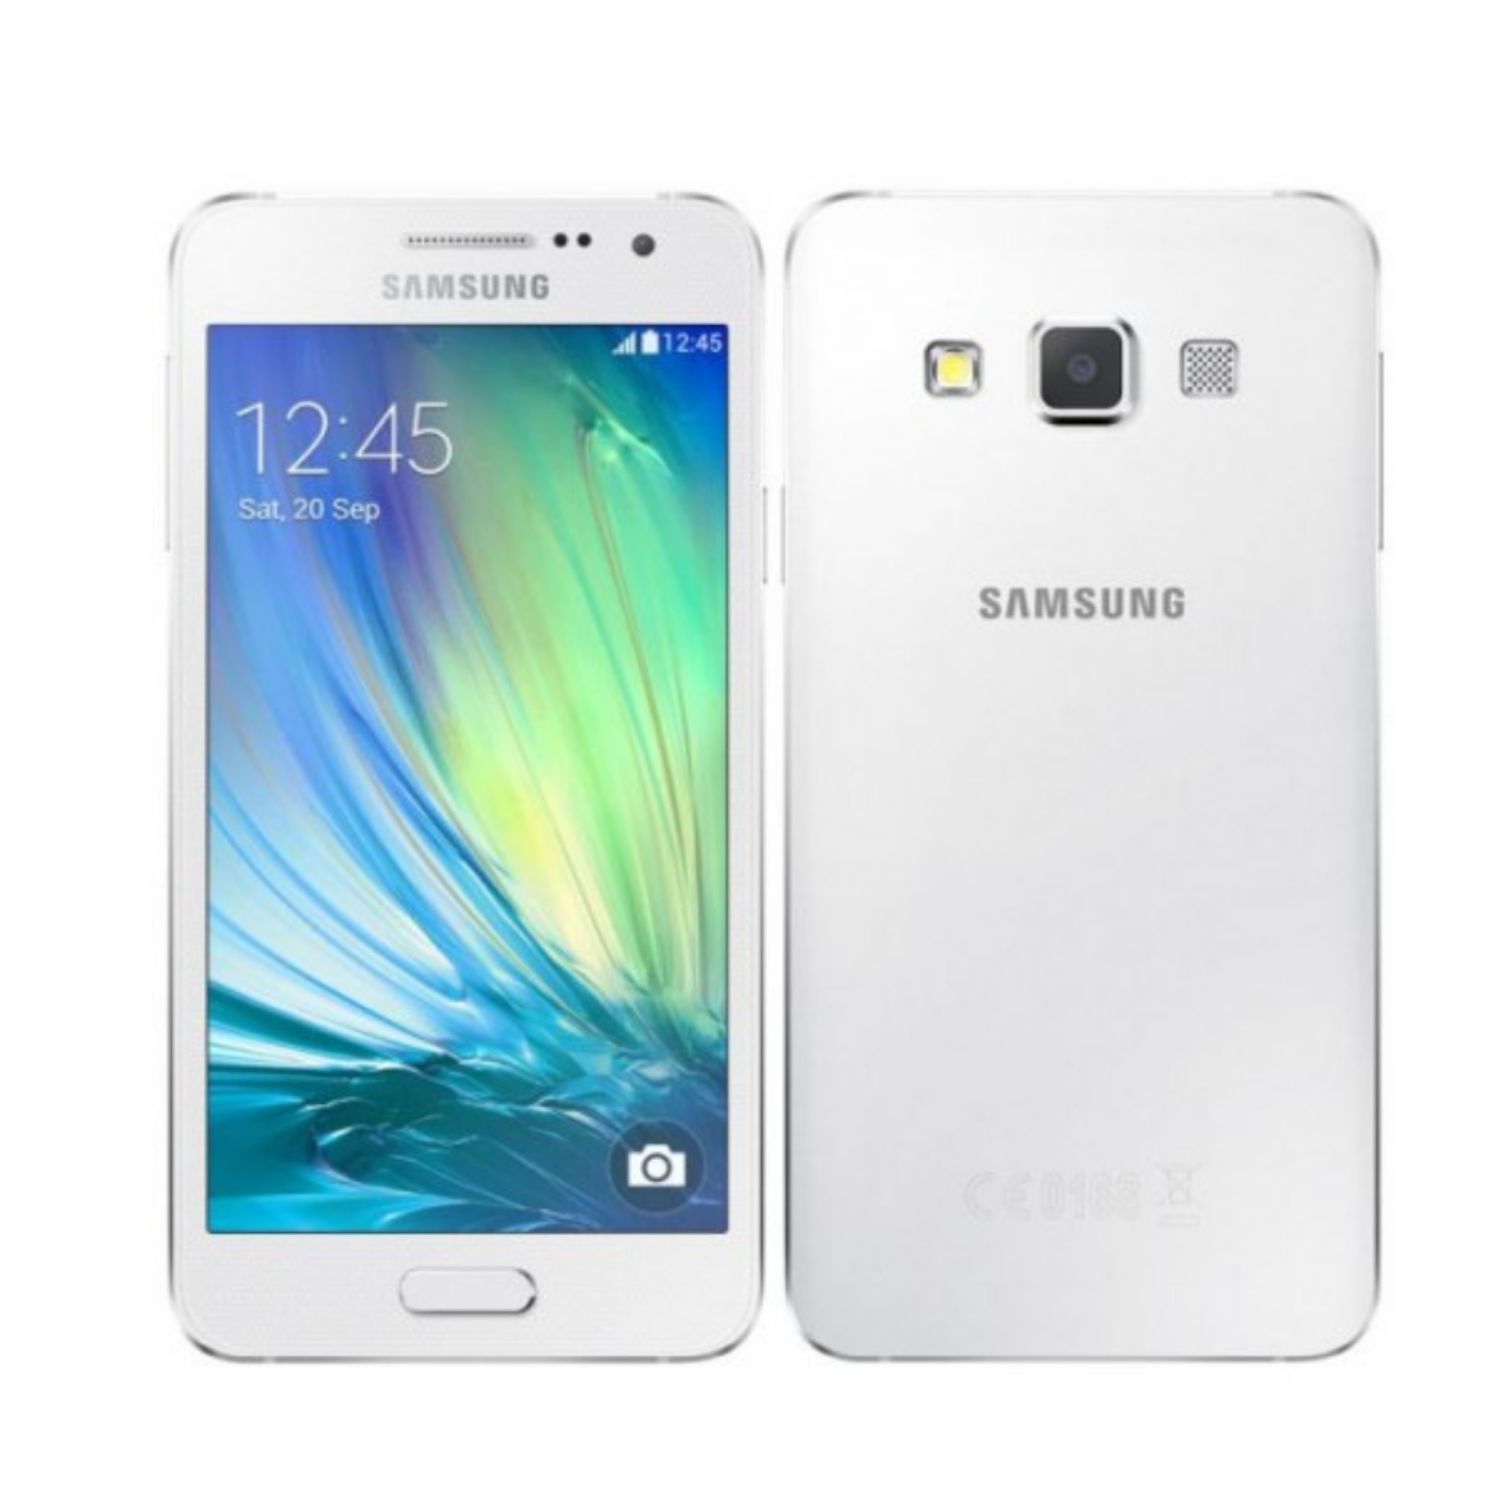 Самсунг а34 цена телефон. Samsung Galaxy a3 2015. Samsung a3 2015 SM a300f. Samsung Galaxy a3 Duos 2015. Samsung Galaxy a3 64gb.